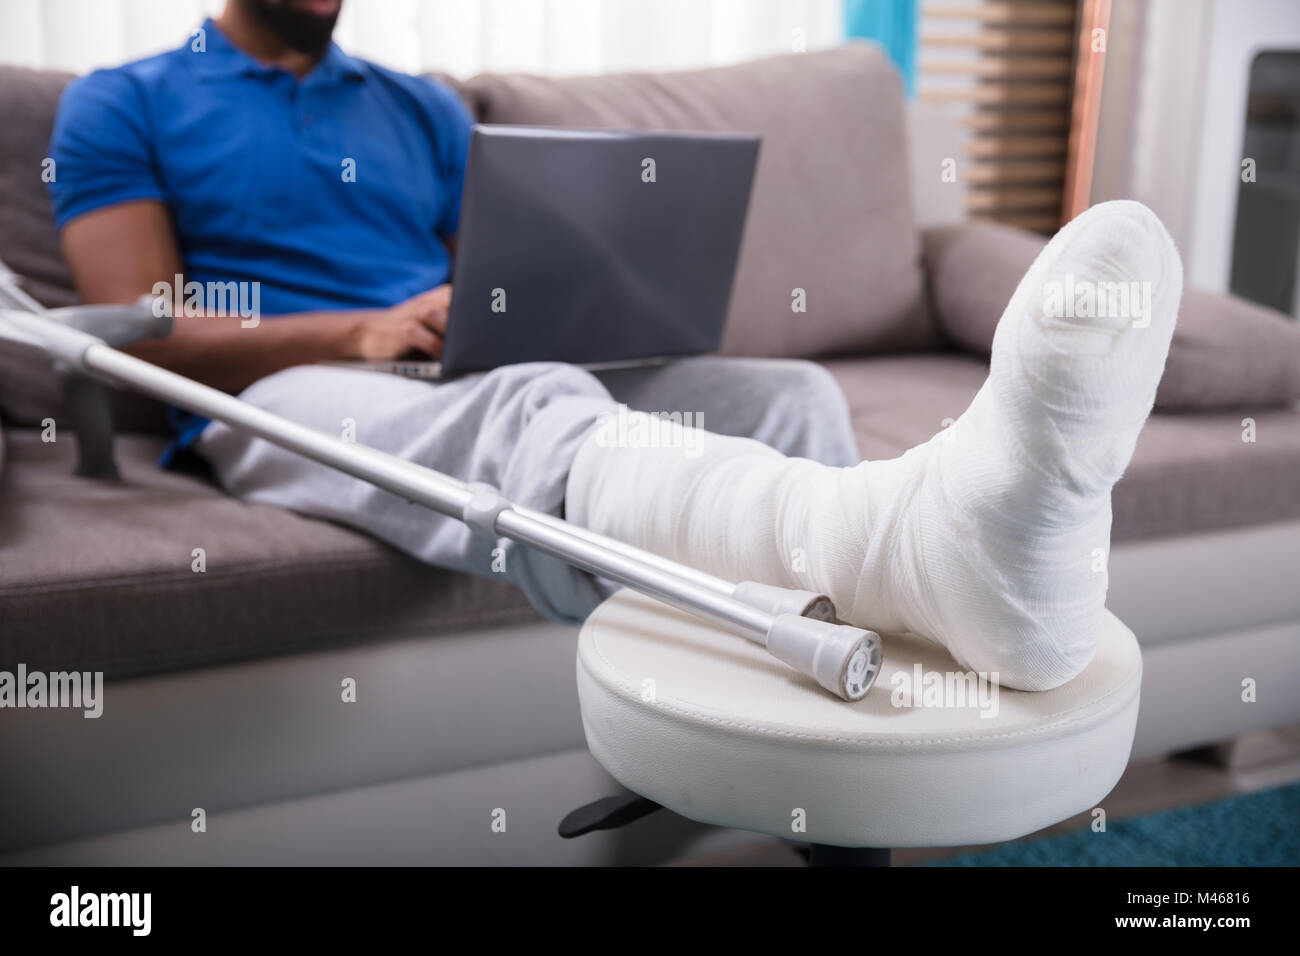 Man With Broken Leg Sitting On Sofa Using Laptop Stock Photo